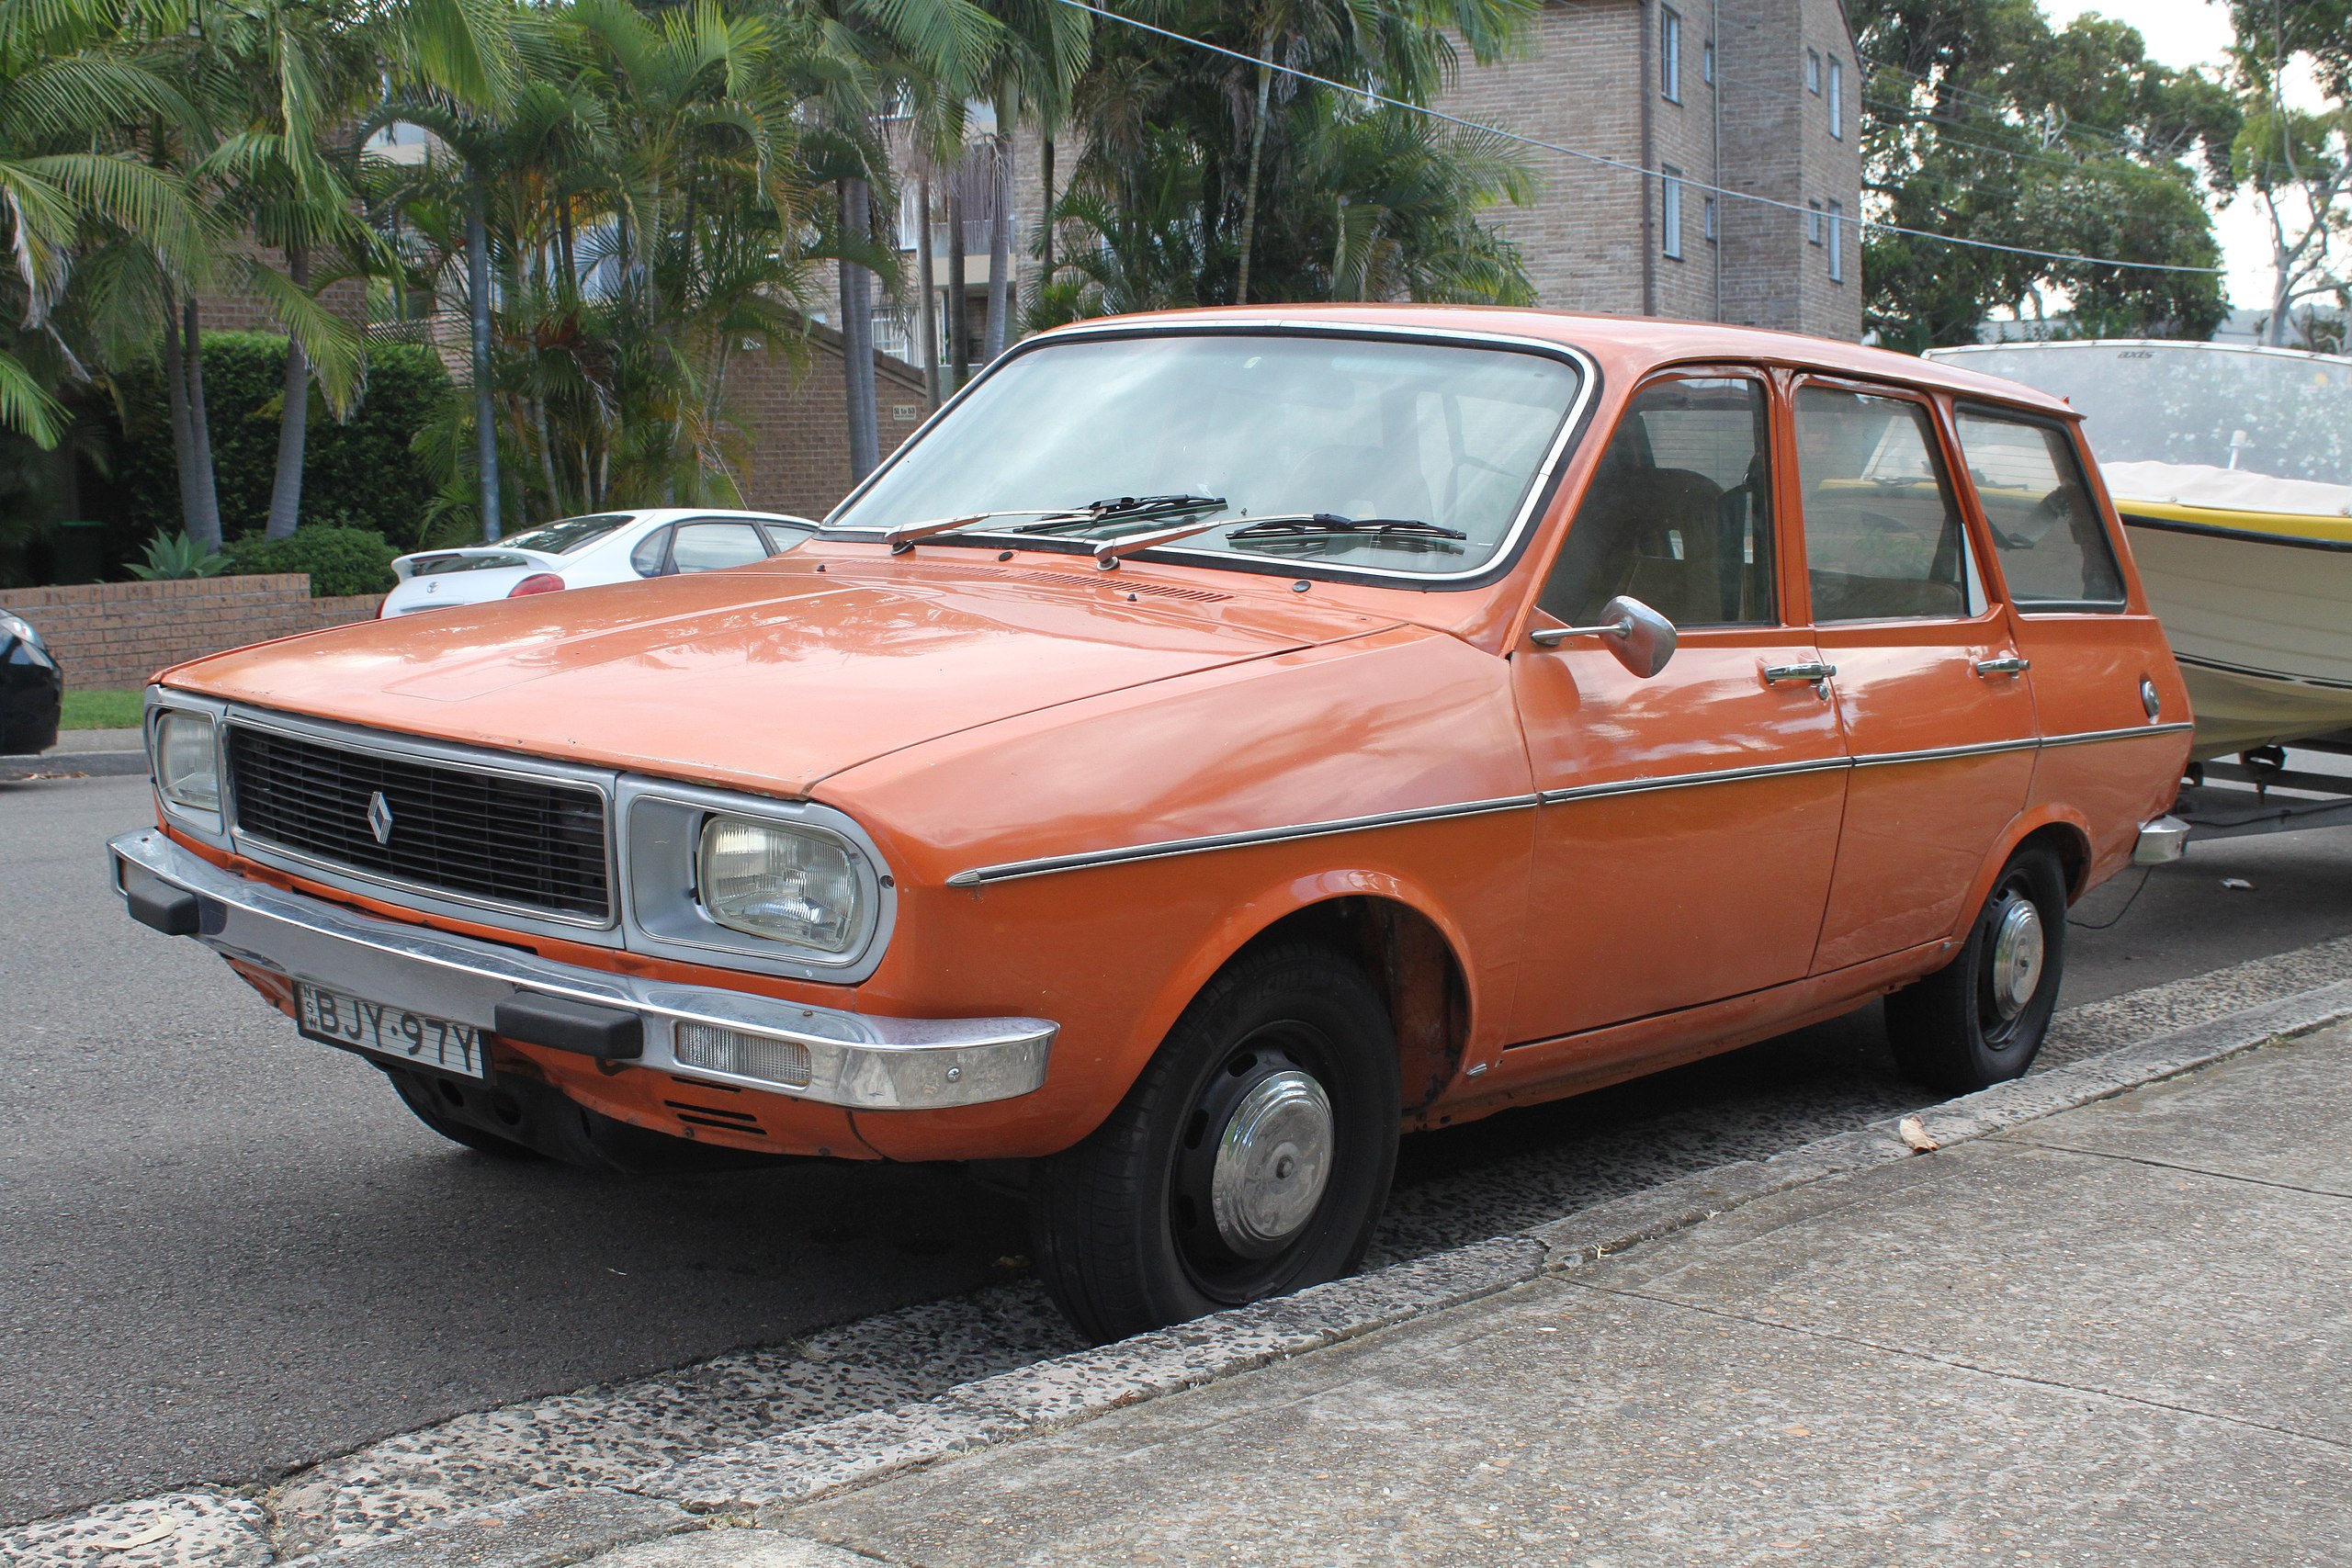 Geaccepteerd Conclusie Condenseren File:1976 Renault 12 1.4 station wagon (25041714523).jpg - Wikimedia Commons